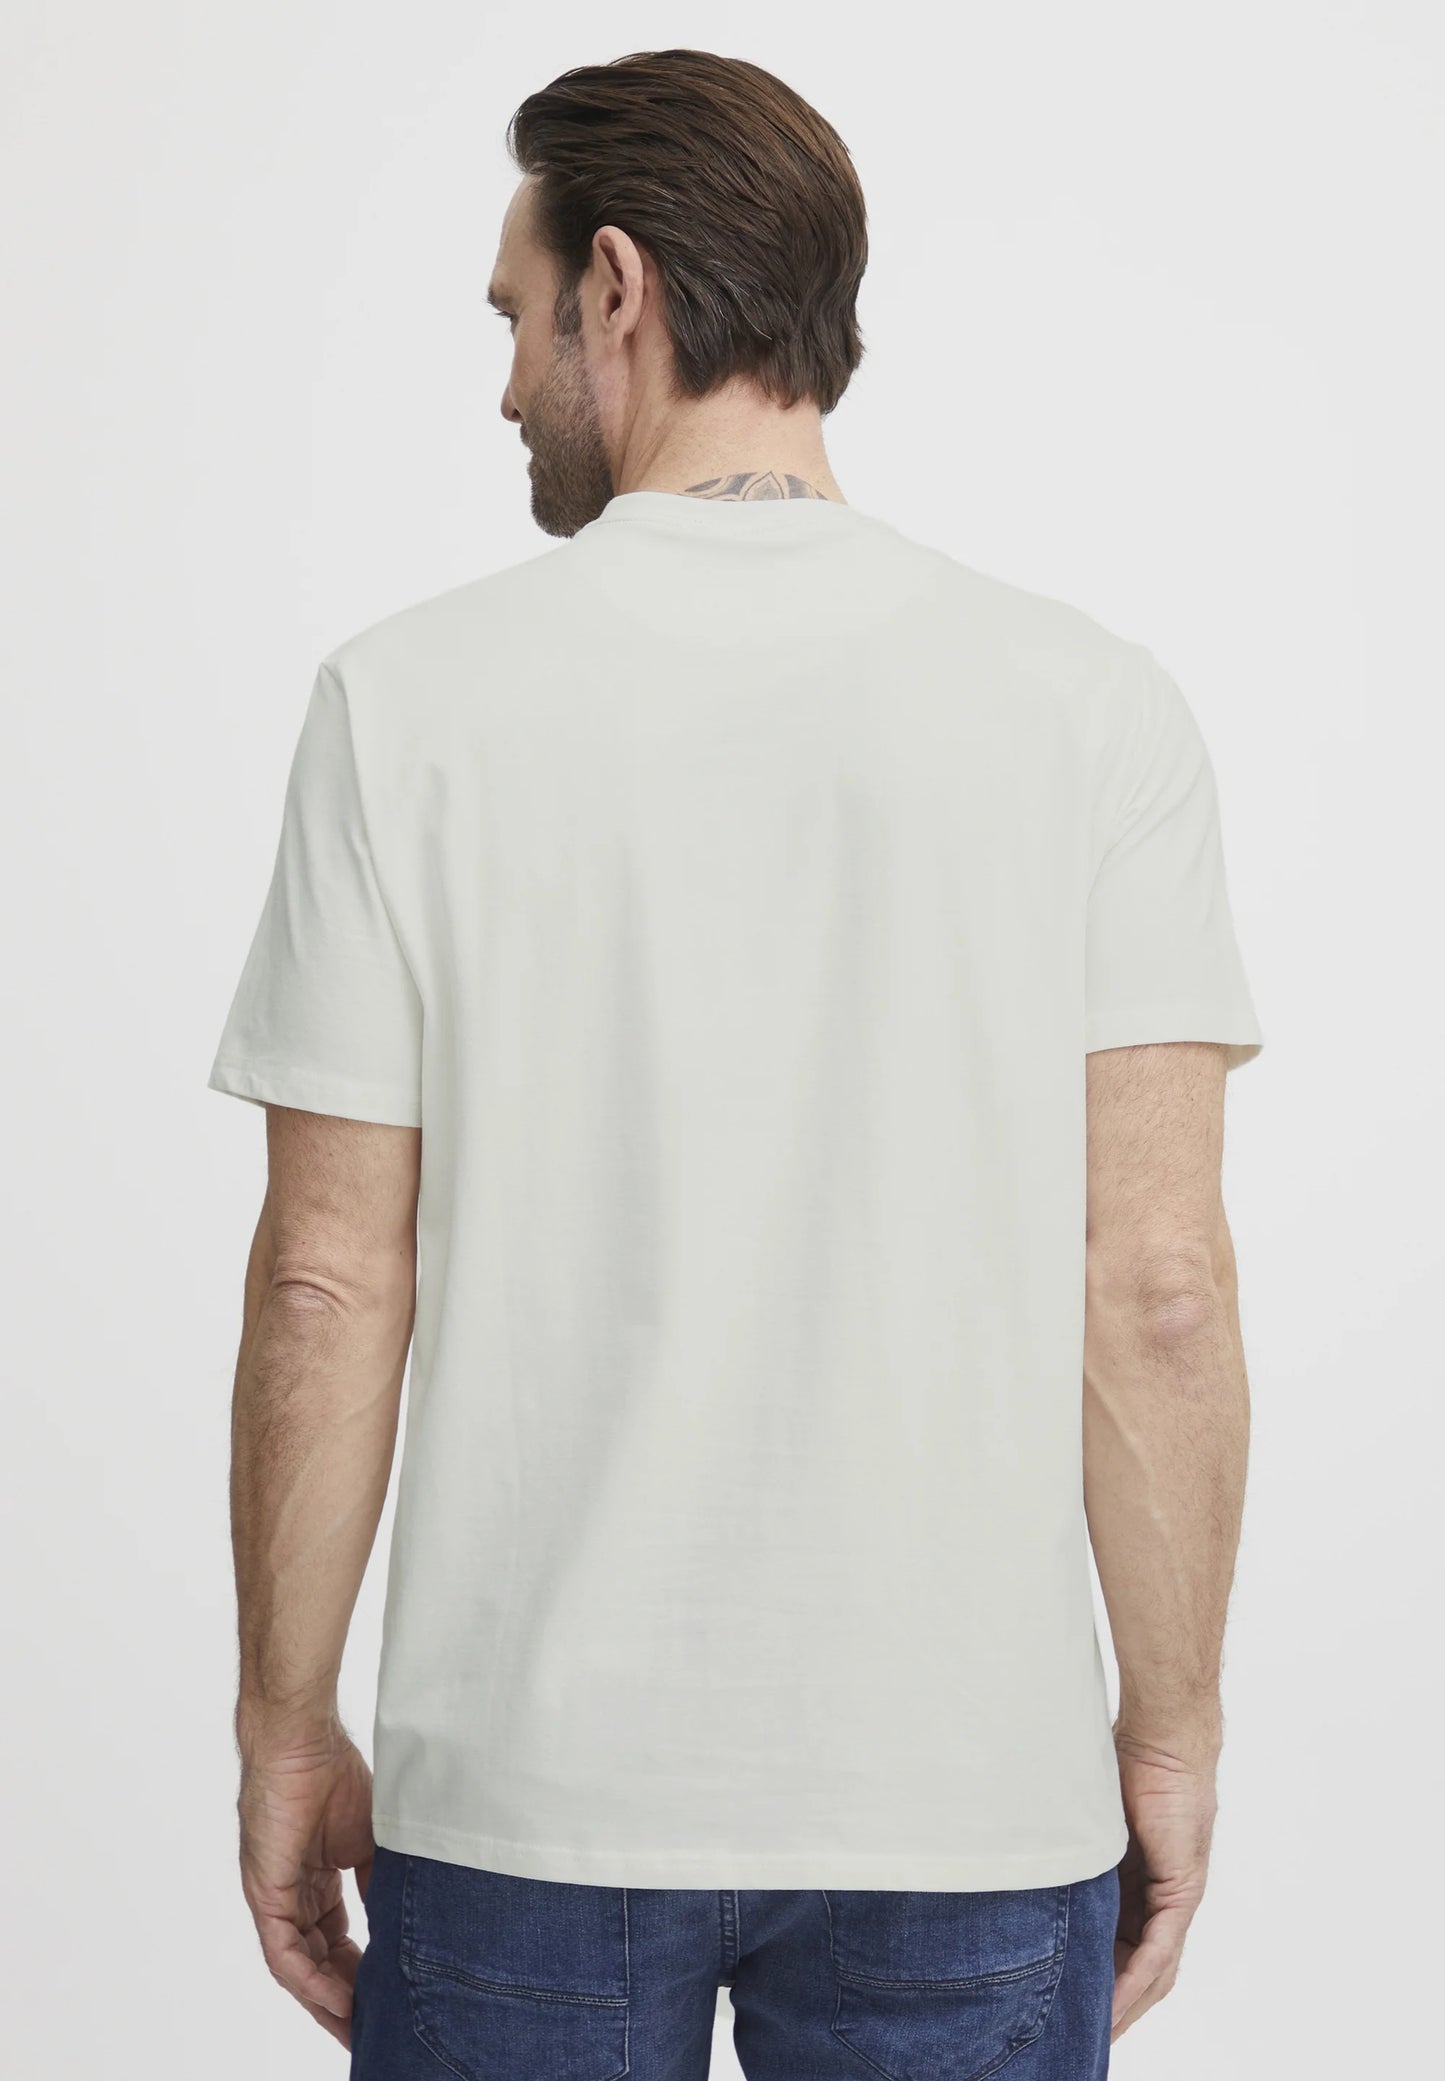 FQ1924 T-shirt in White